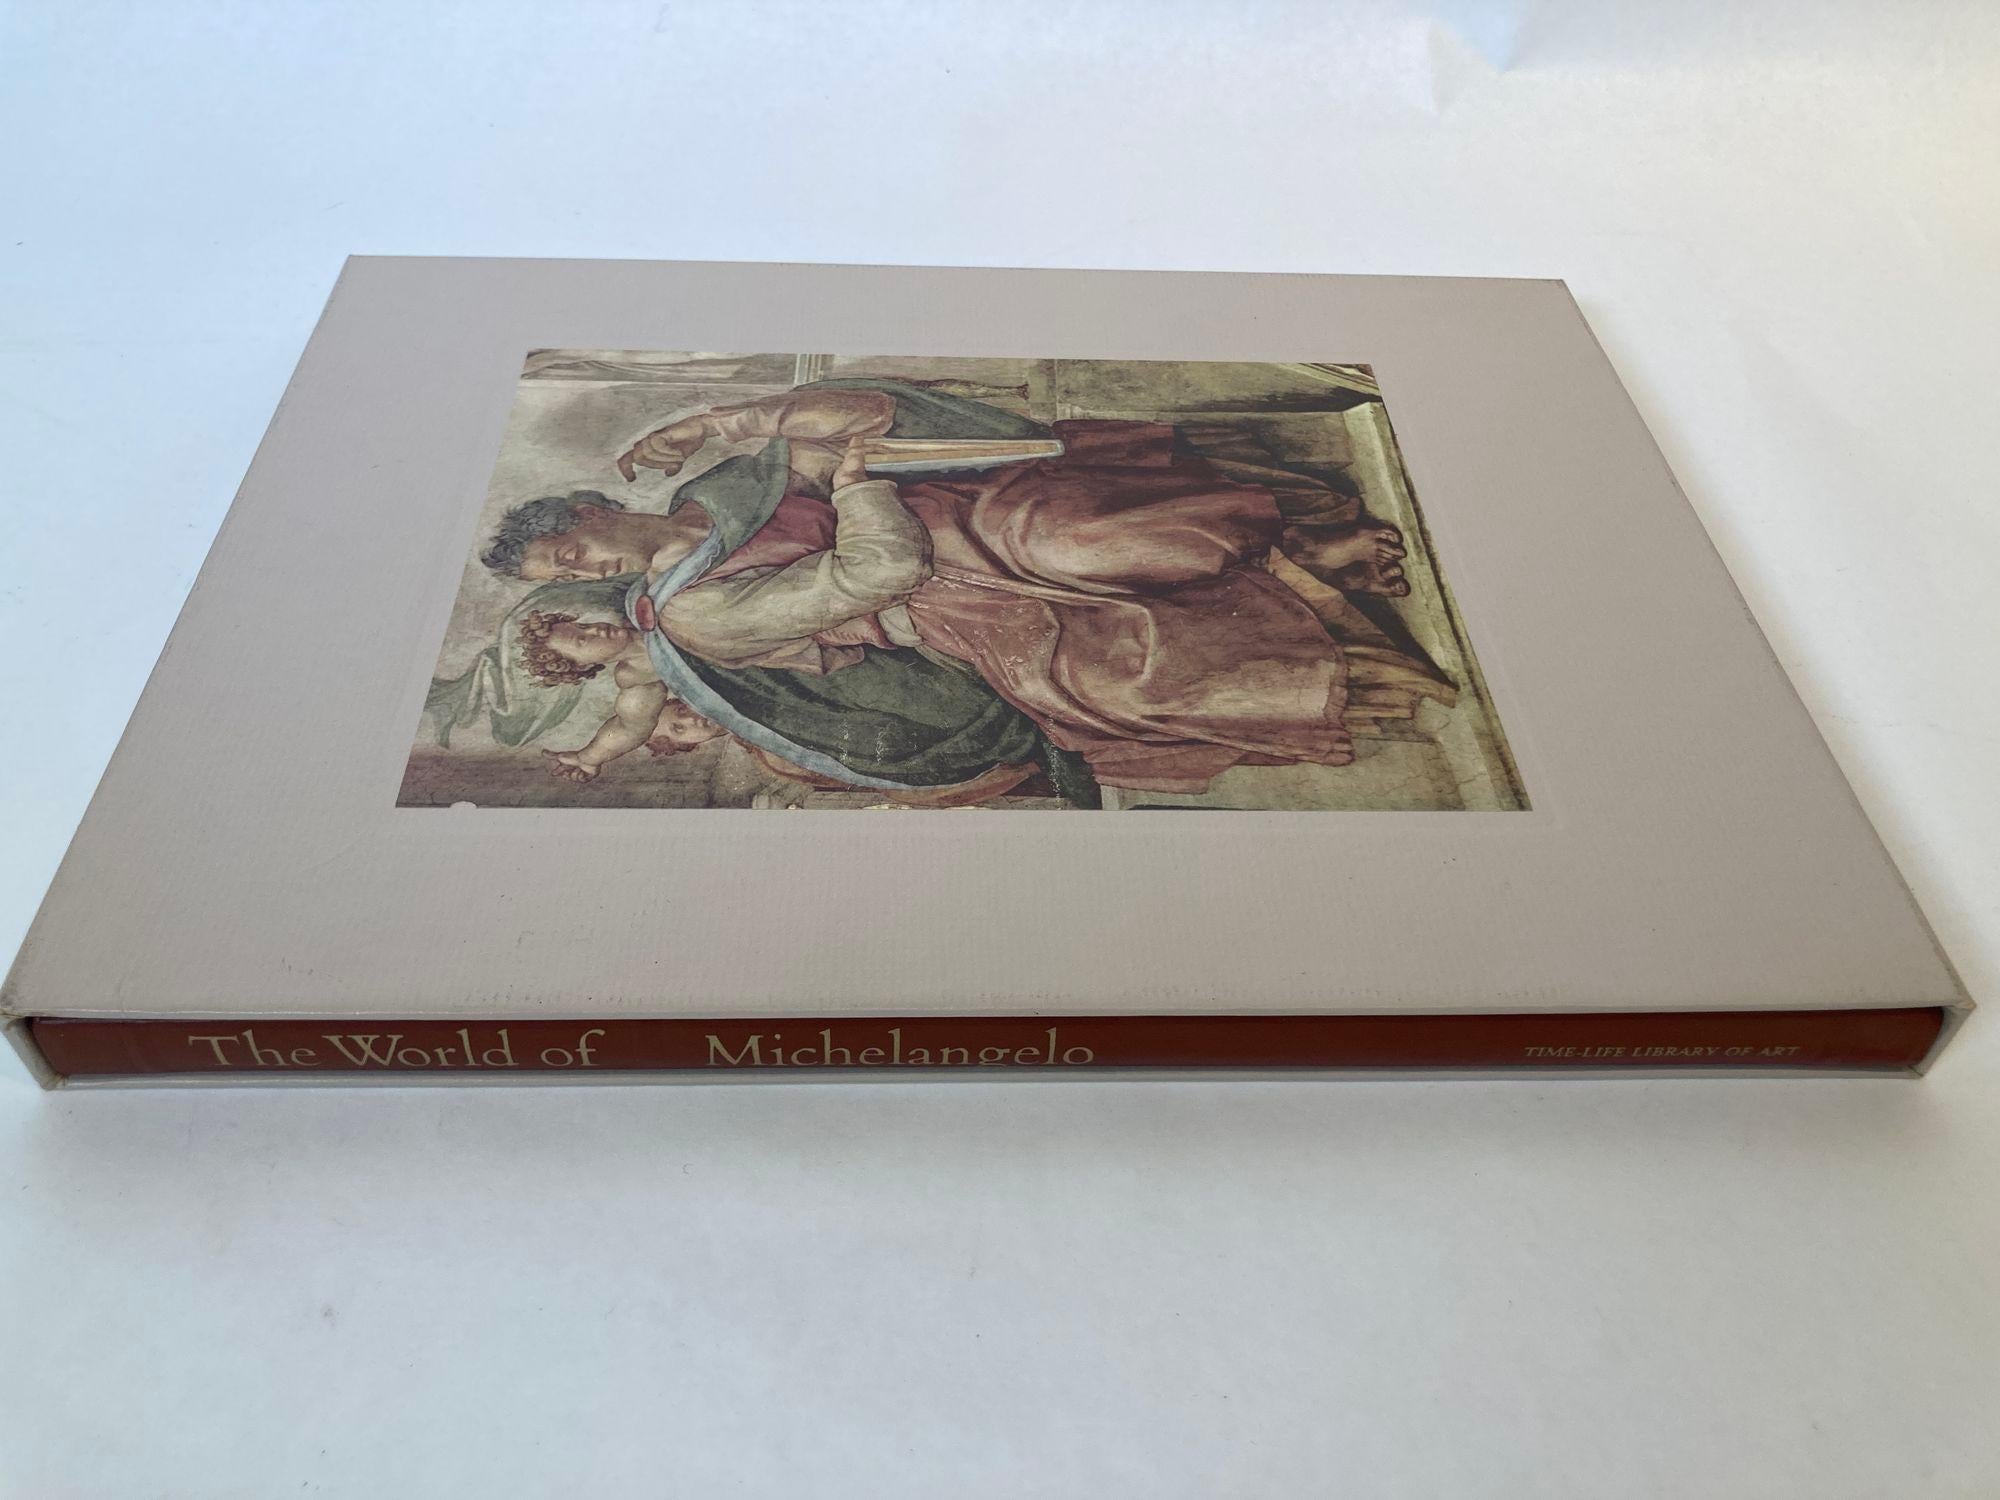 Livre « The World of Michelangelo 1475-1564 » de Robert Coughlan en vente 5